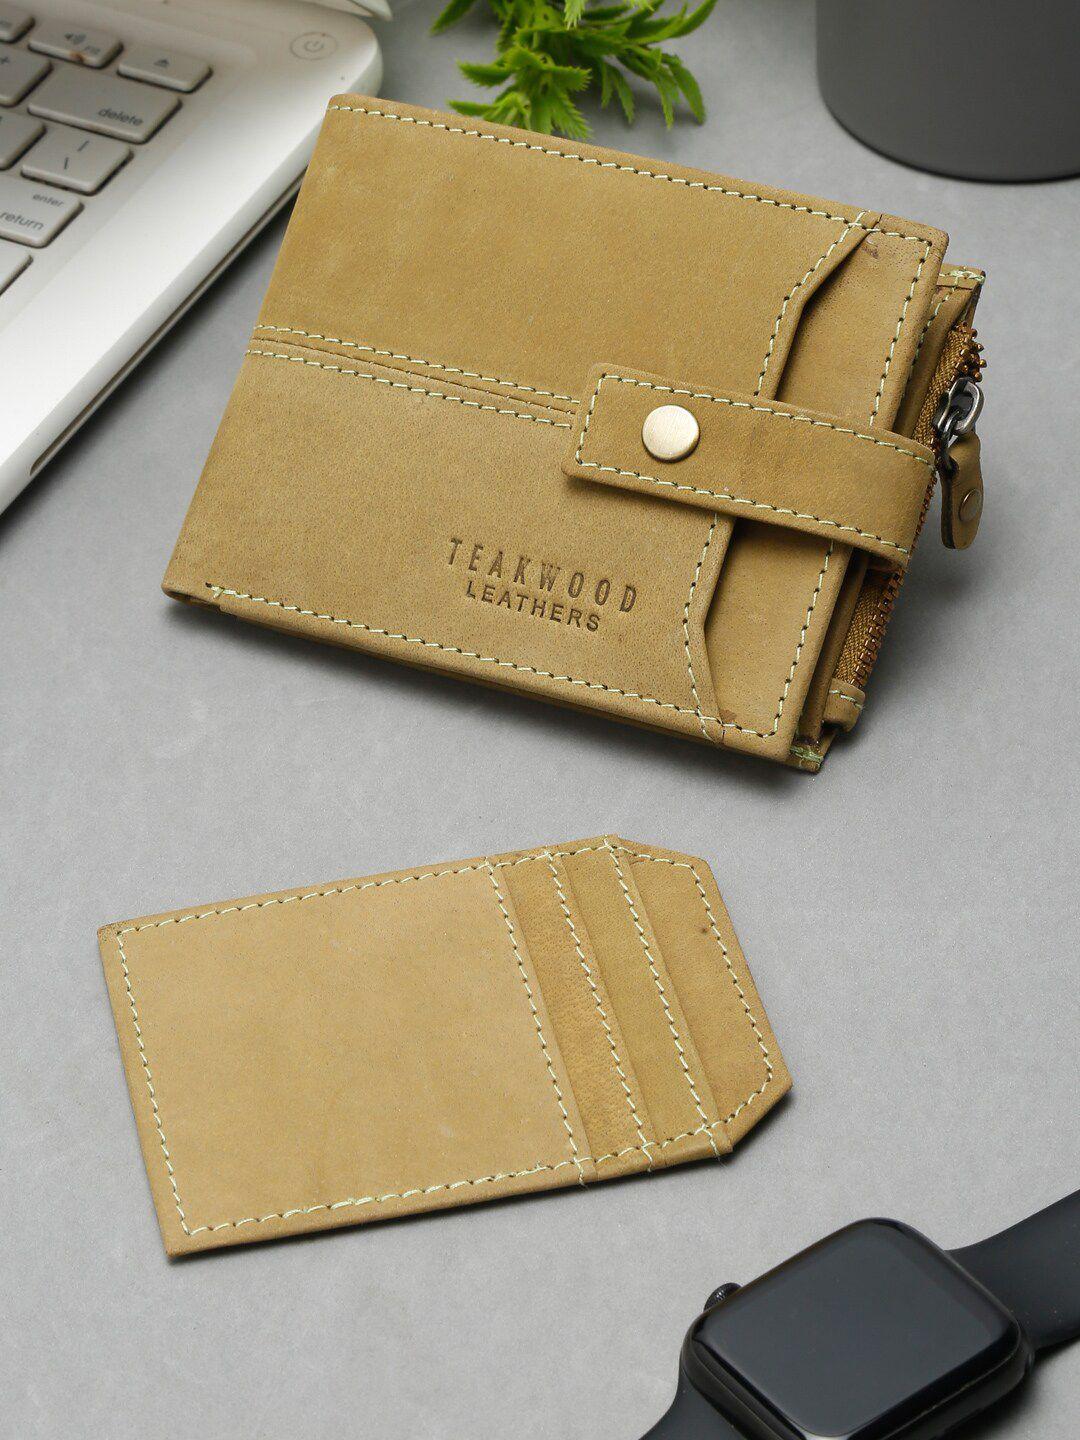 teakwood leathers men leather rfid two fold wallet